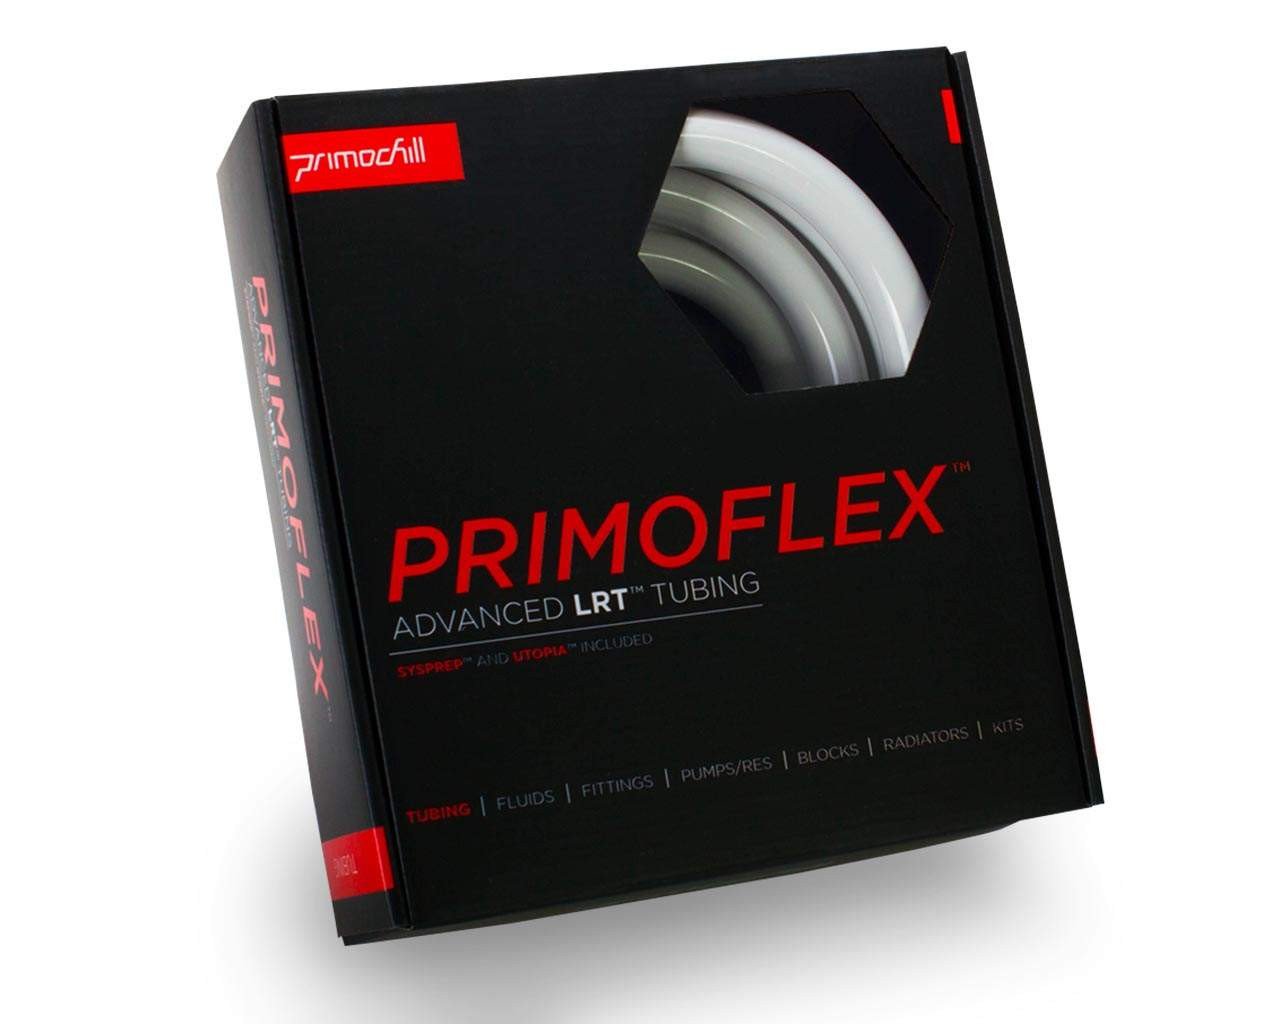 PrimoFlex Advanced LRT Soft Flexible Tubing -3/8in.ID x 1/2in.OD, 10 feet - PrimoChill - KEEPING IT COOL Elegant White